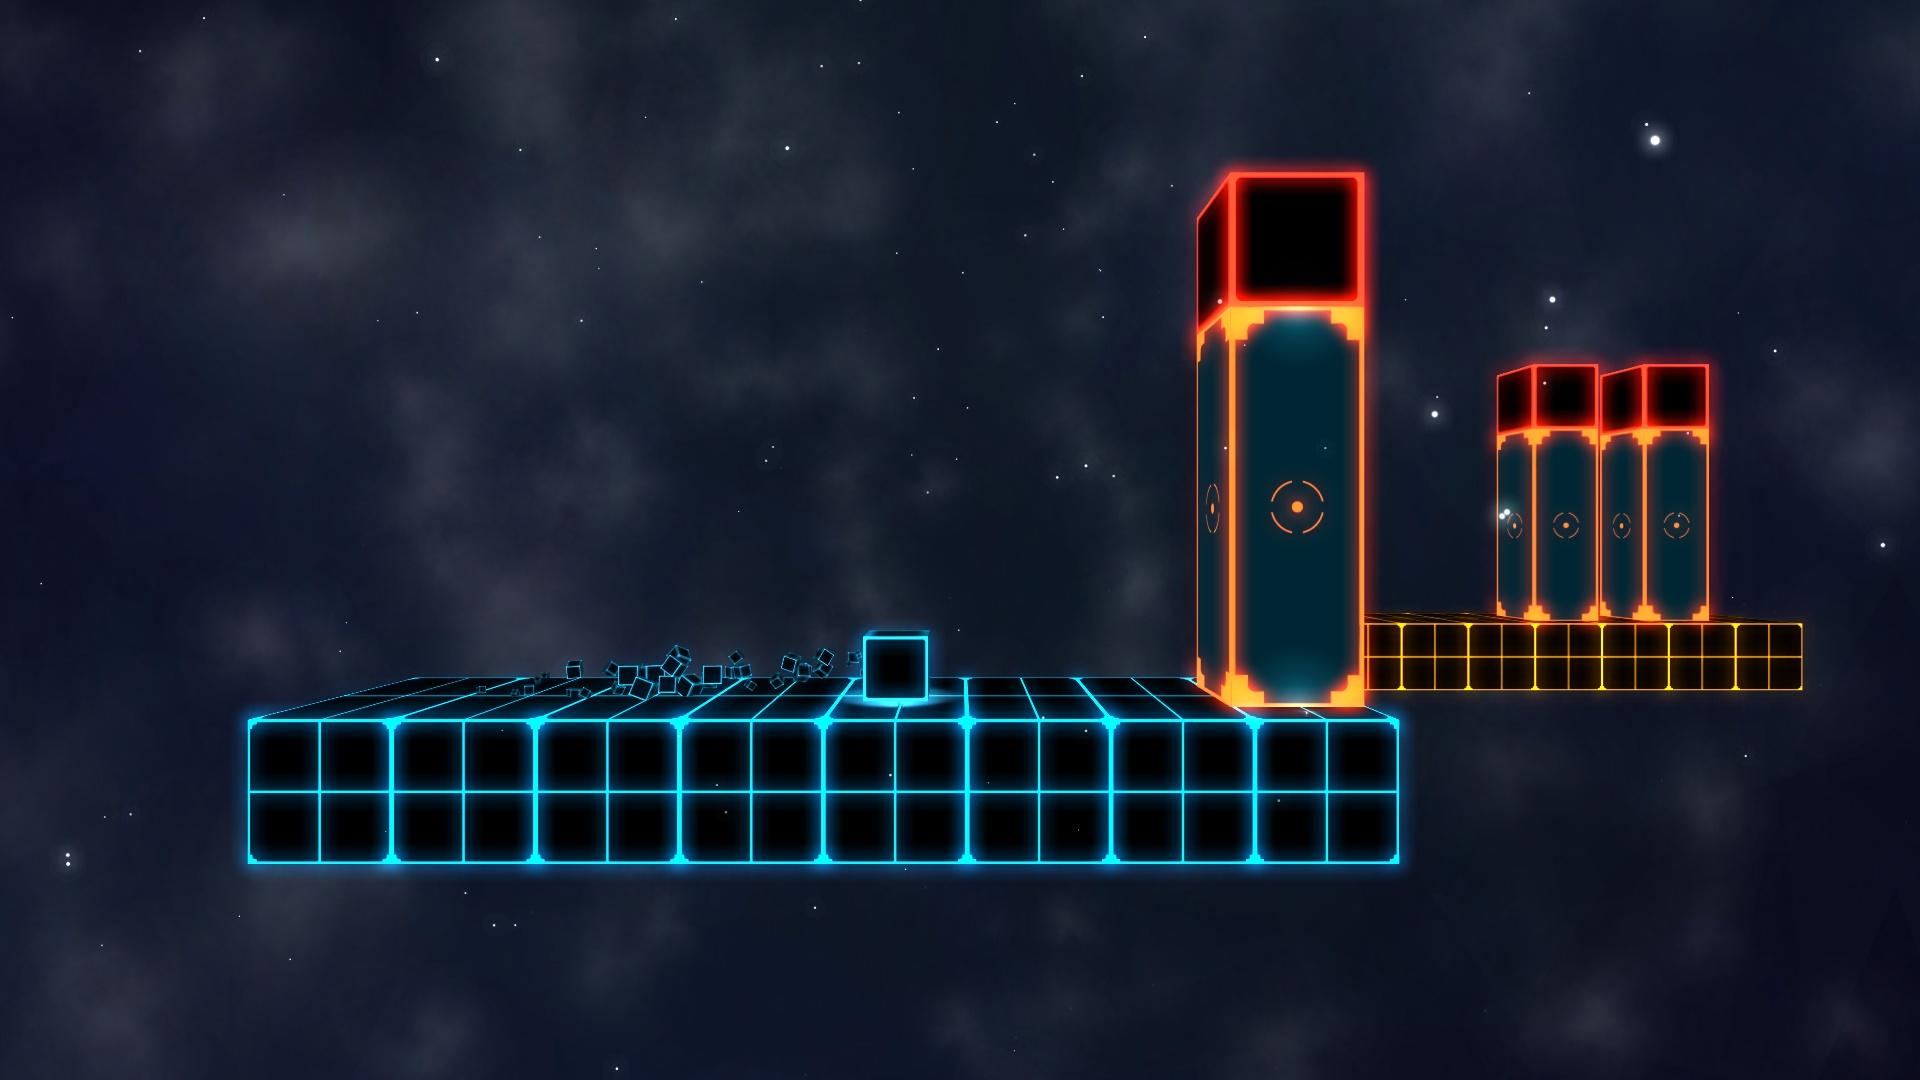 Screenshot №5 from game Cube Runner